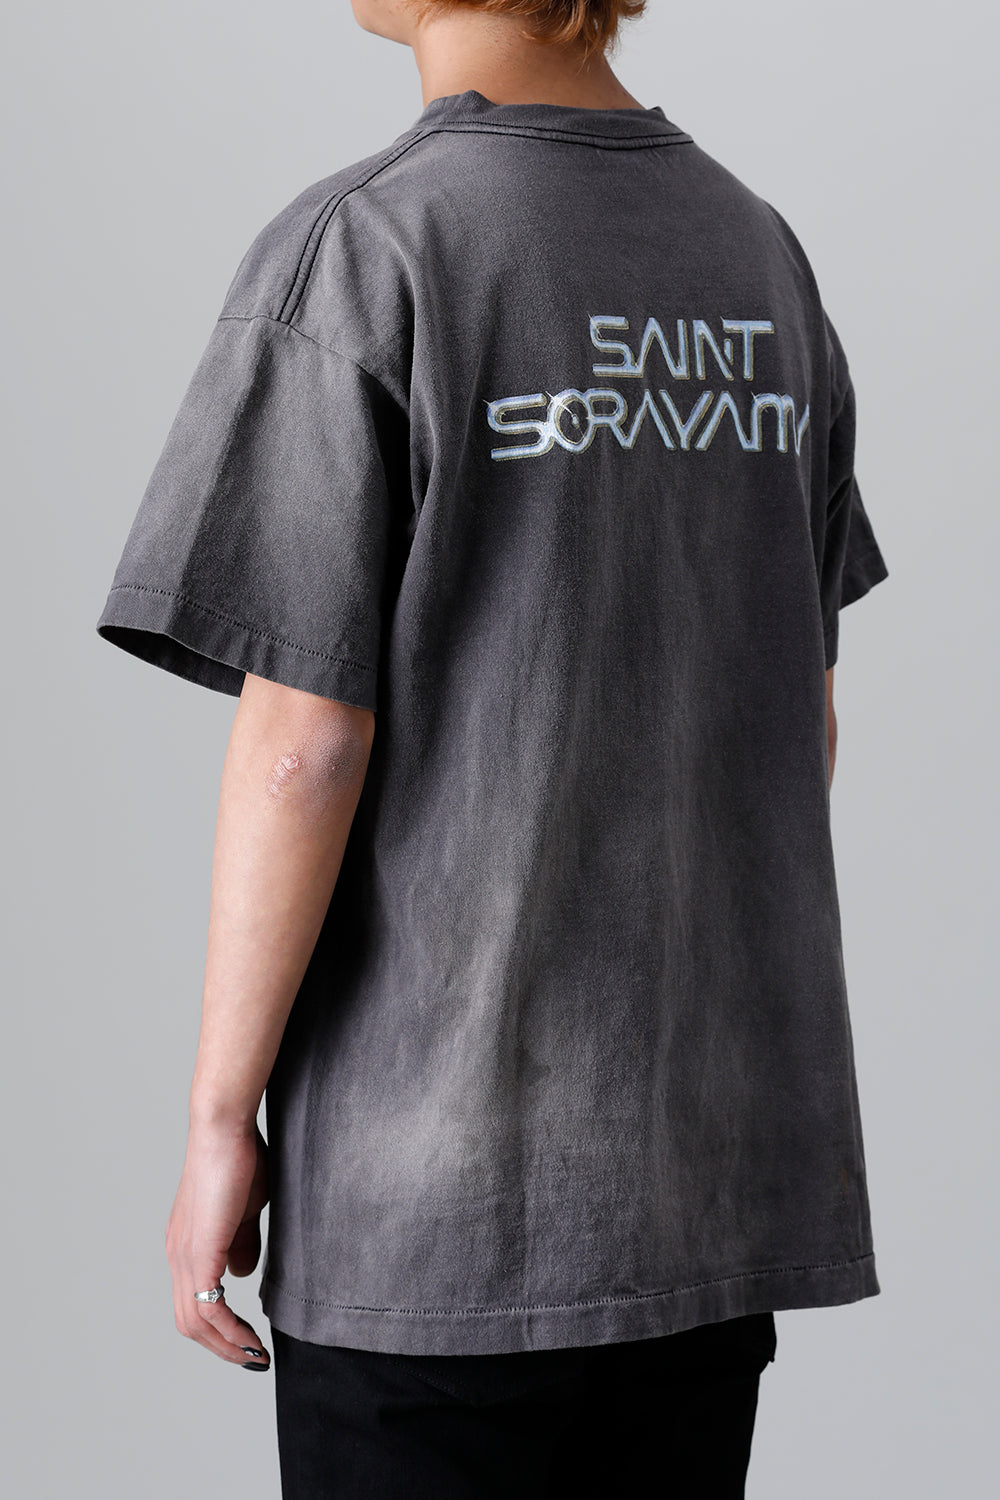 saint michael × sorayama Tシャツ